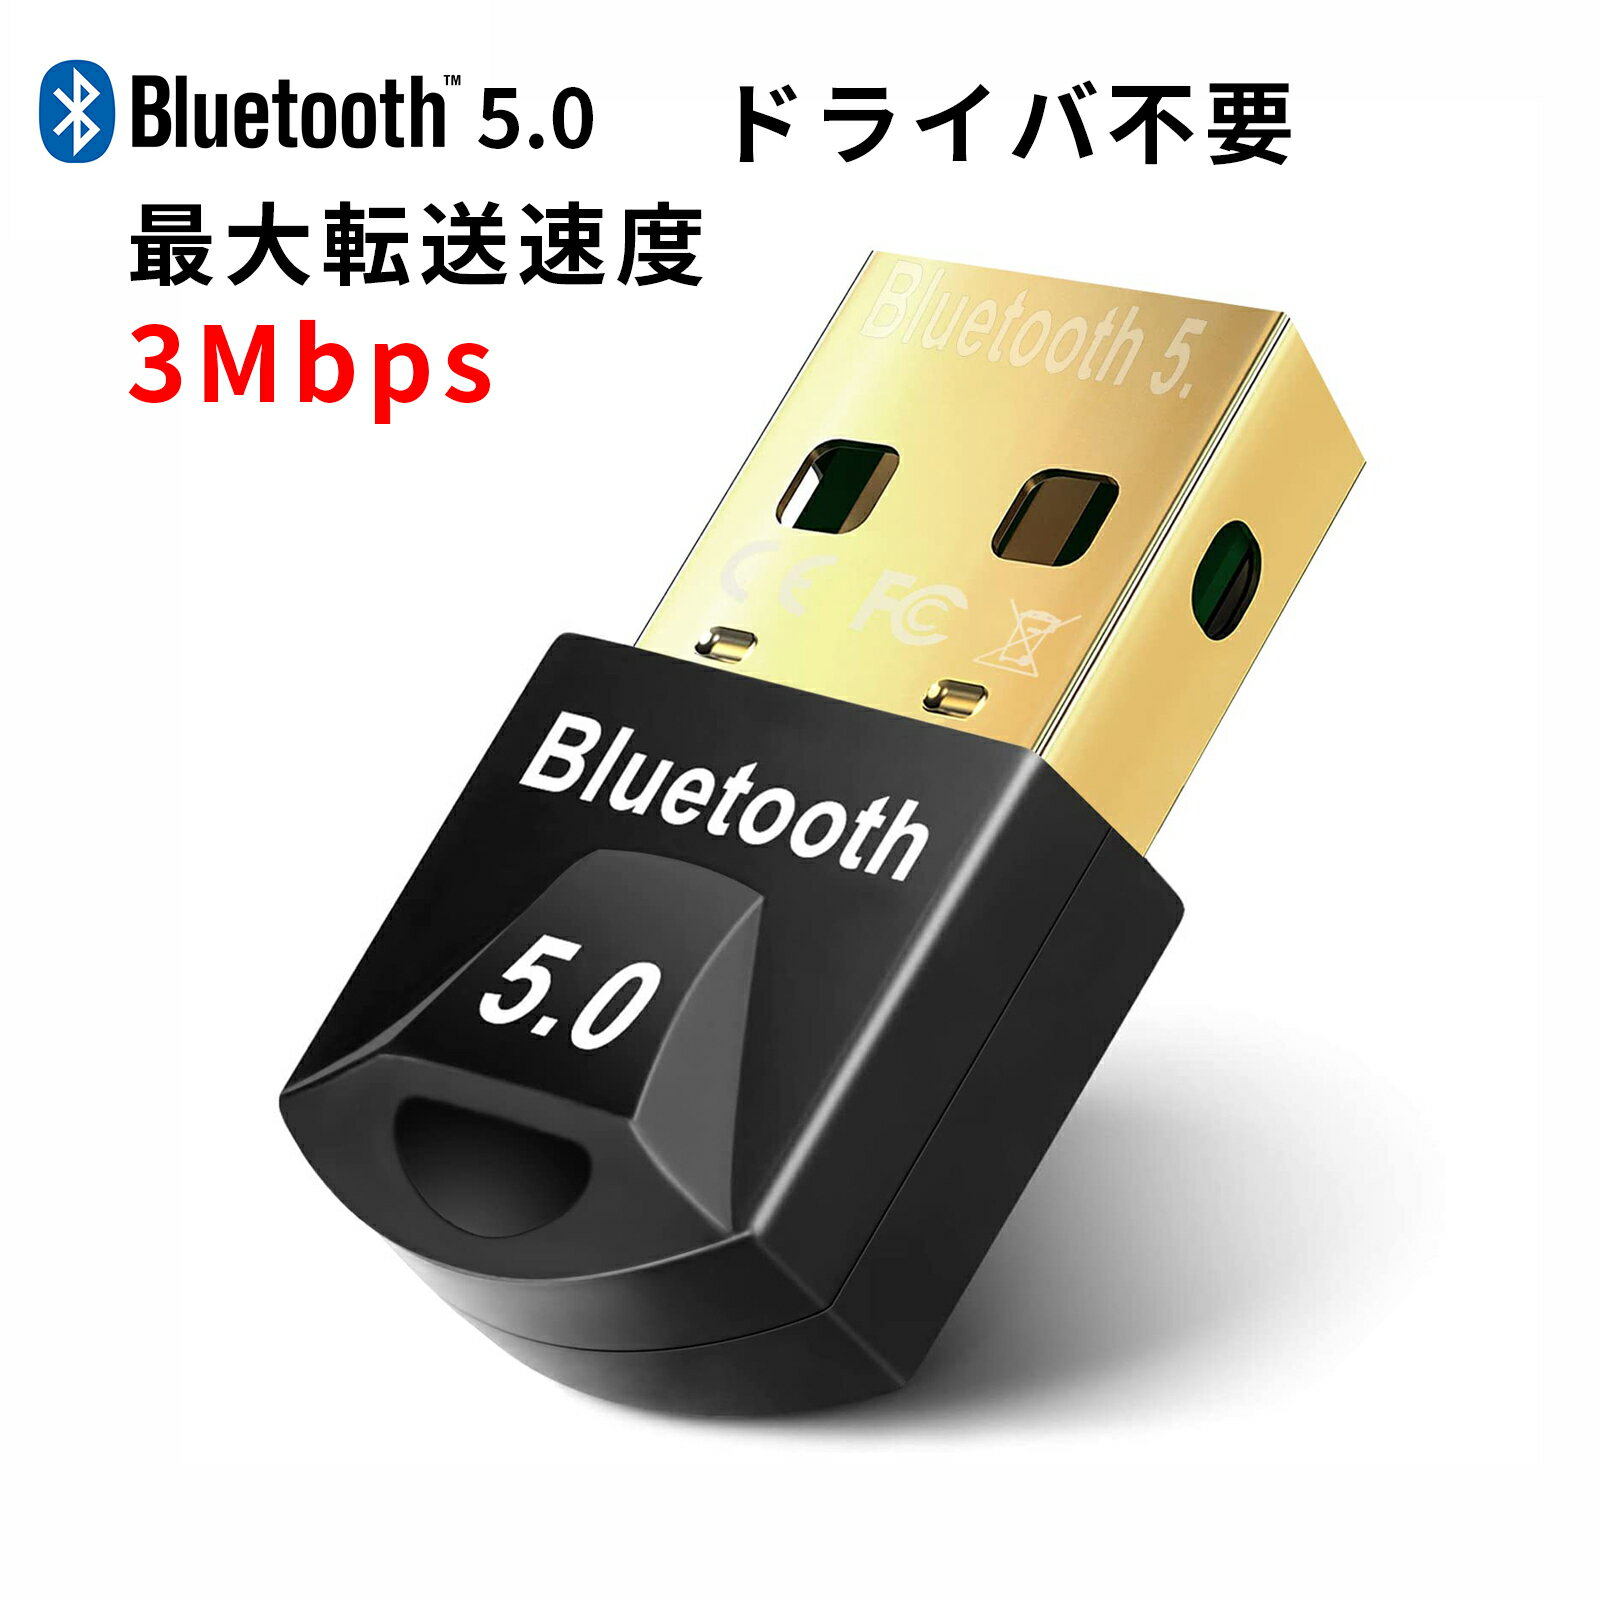 Bluetoothアダプタ 5.0 Bluetooth USBアダプター 低遅延 無線 超小型 ドングル 最大通信距離20m apt-X対応 EDR/LE対応(省電力) Windows 11/10/8/7/XP(32/64bit) 対応 Mac非対応 (プラグアンドプレイ)